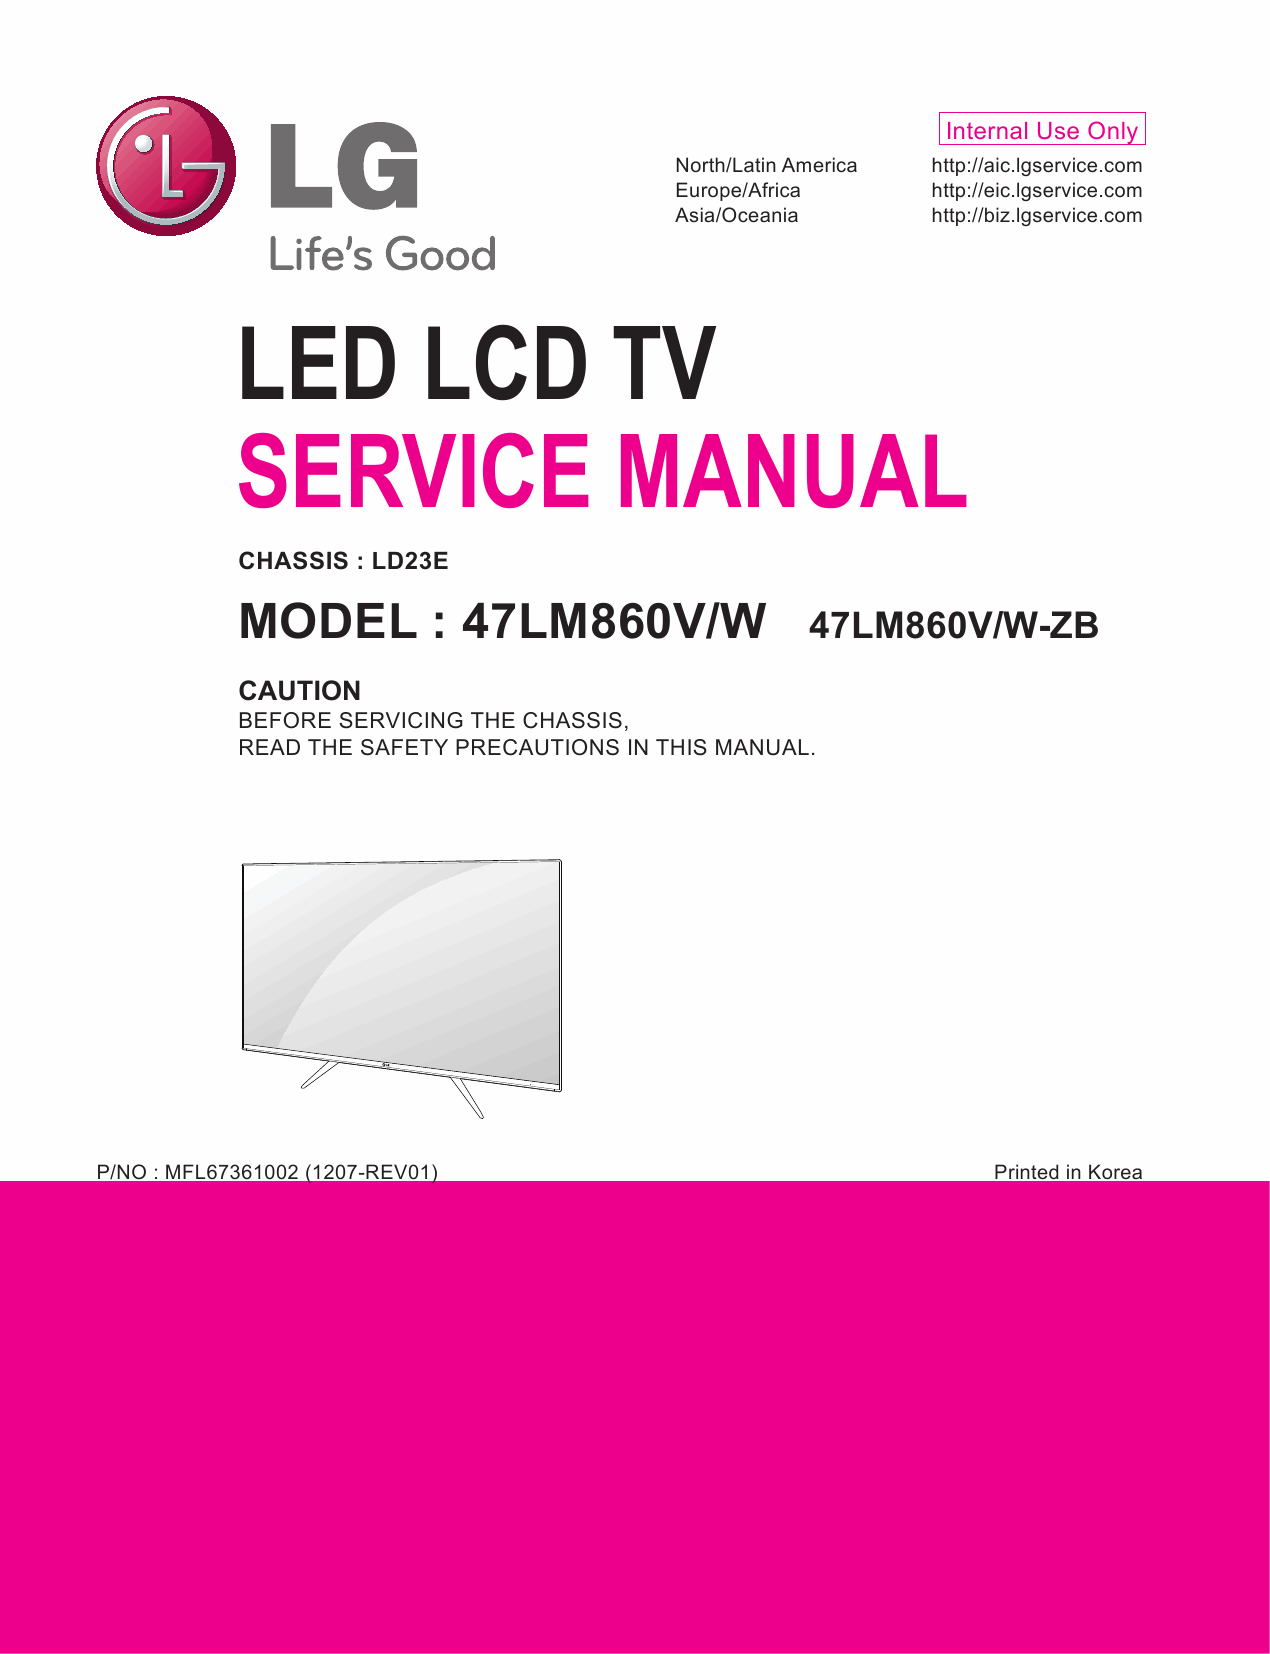 LG_LCD_TV_47LM860V_860W_Service_Manual_2012_Qmanual.com-1